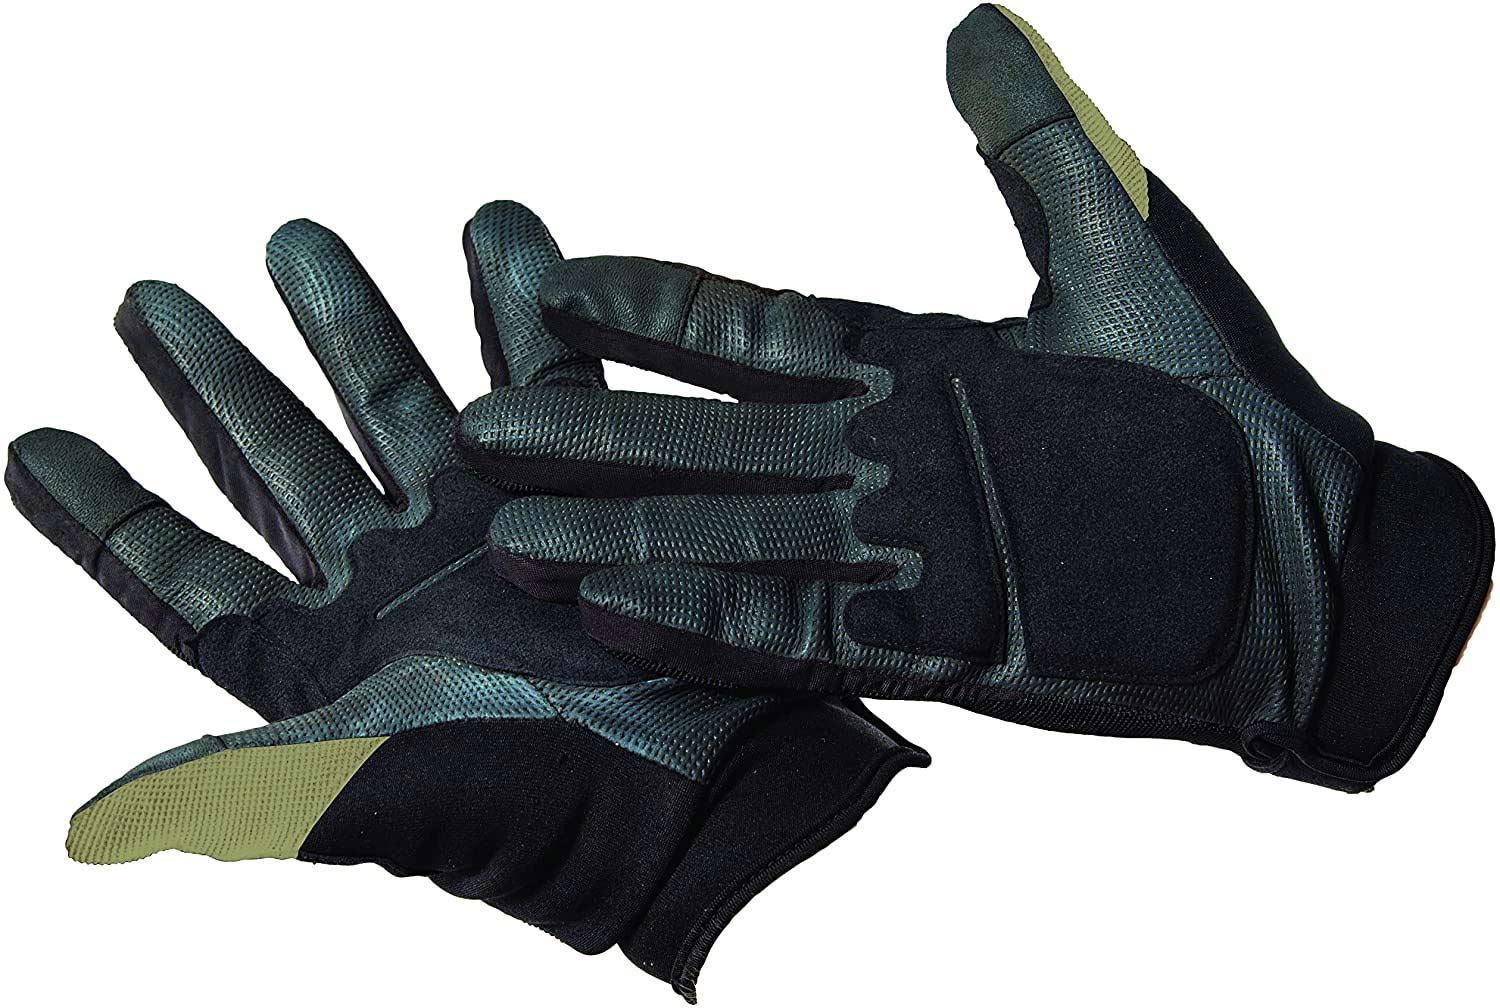 3m Thinsulate Shooting Fingerless Gloves Green 